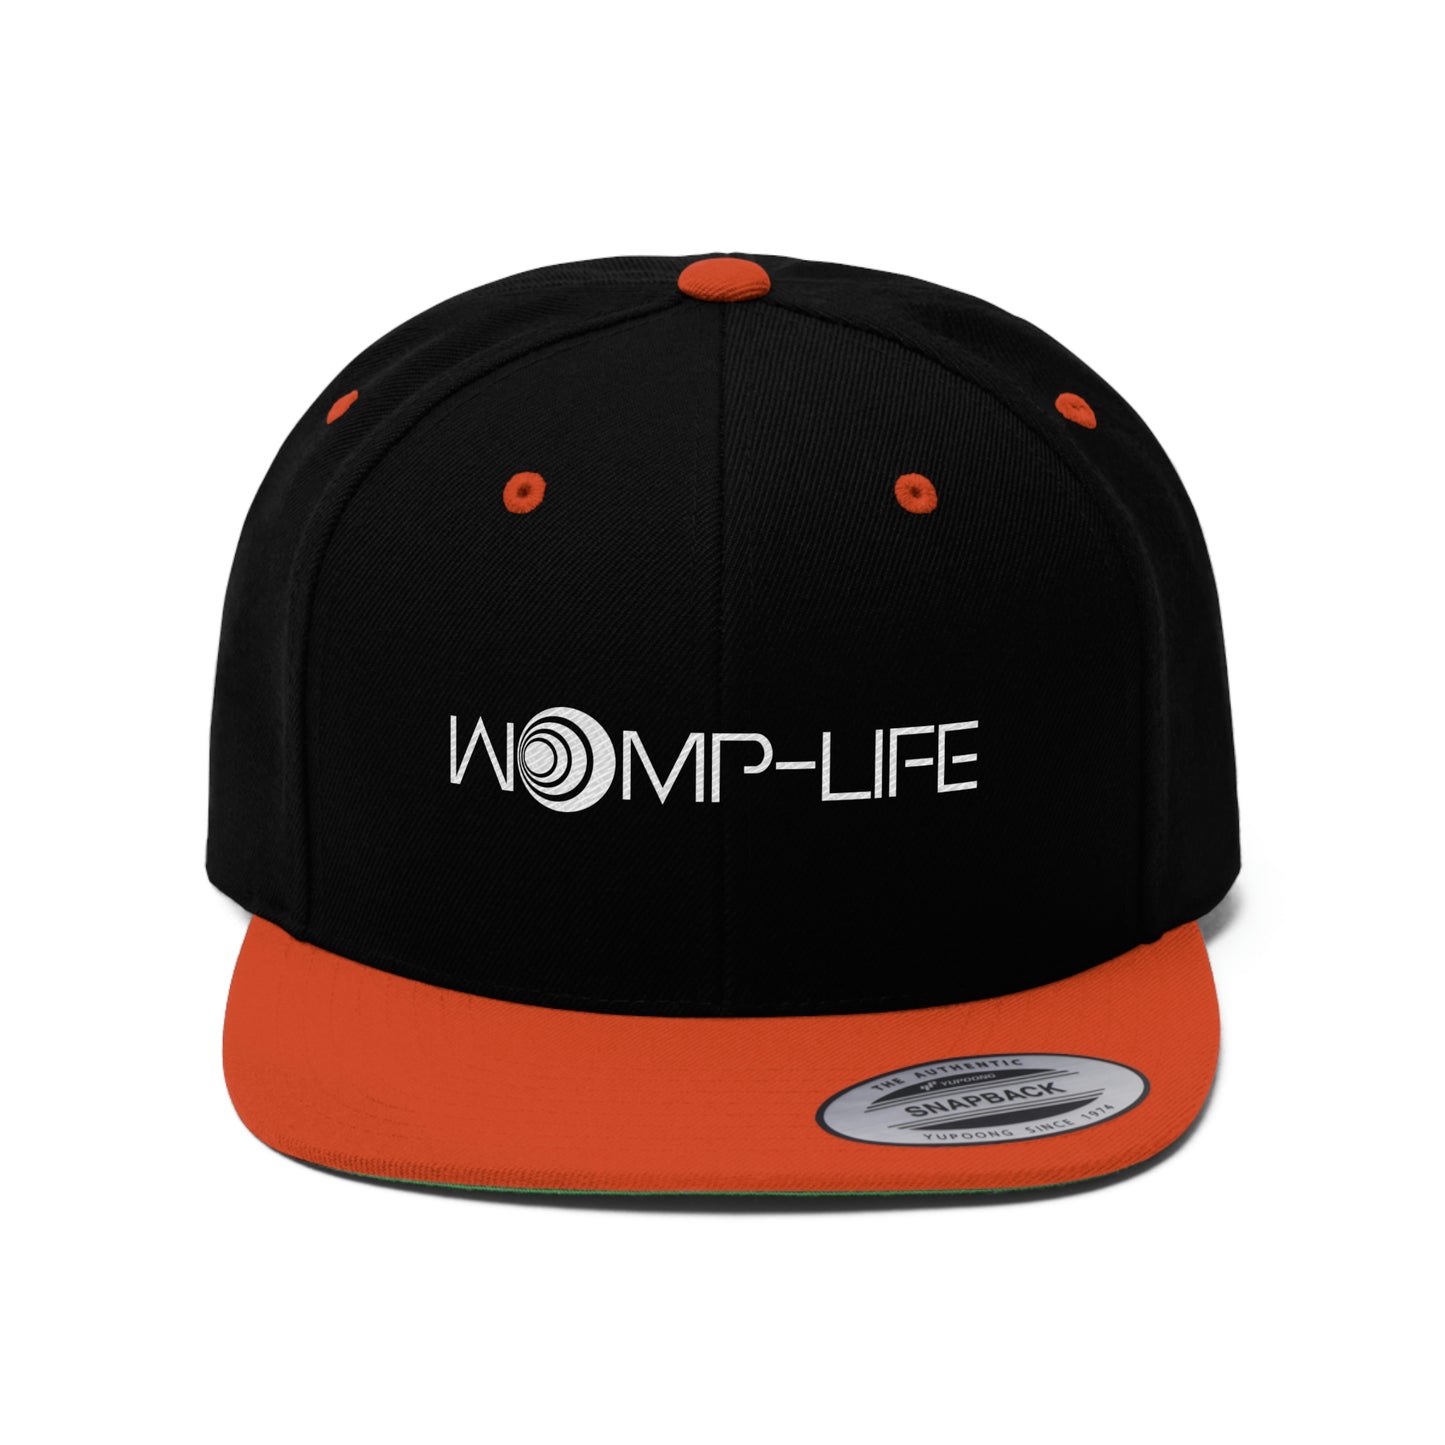 Womp-Life Color Unisex Flat Bill Hat